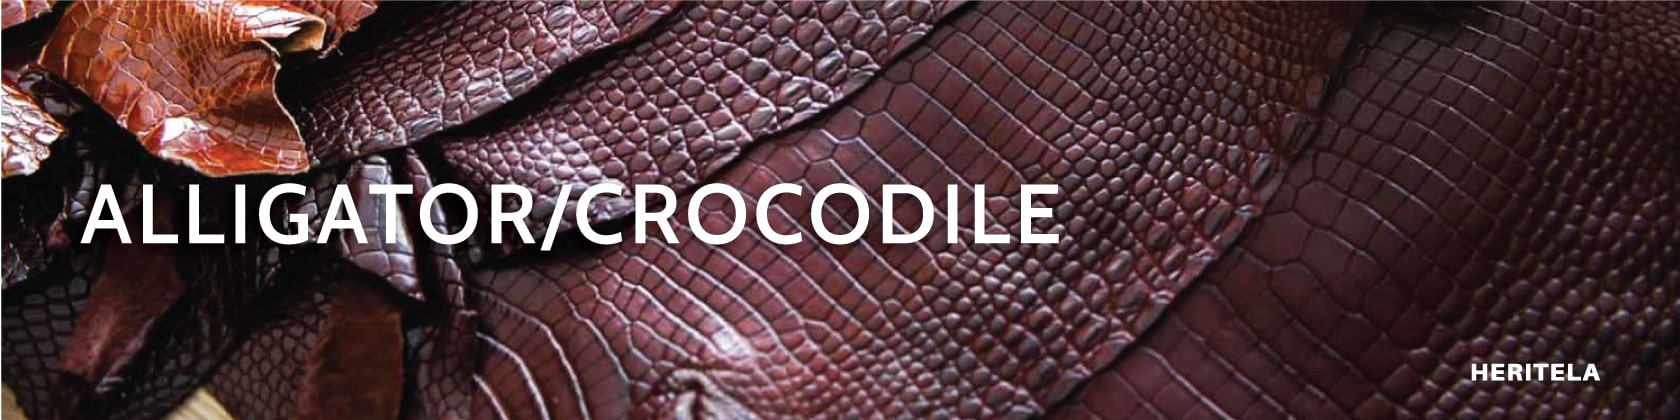 Alligator crocodile leather